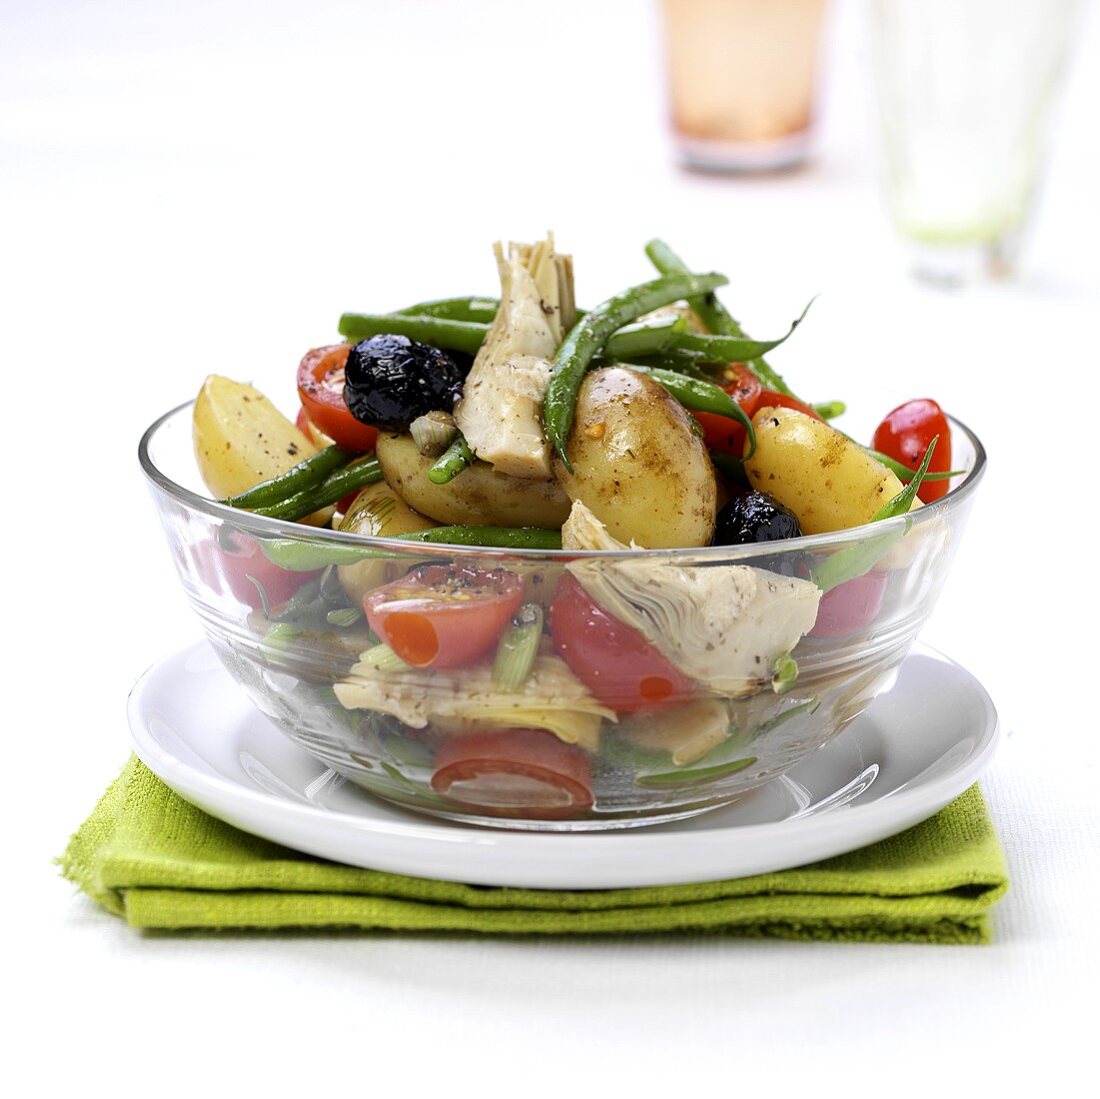 Mediterranean vegetable salad